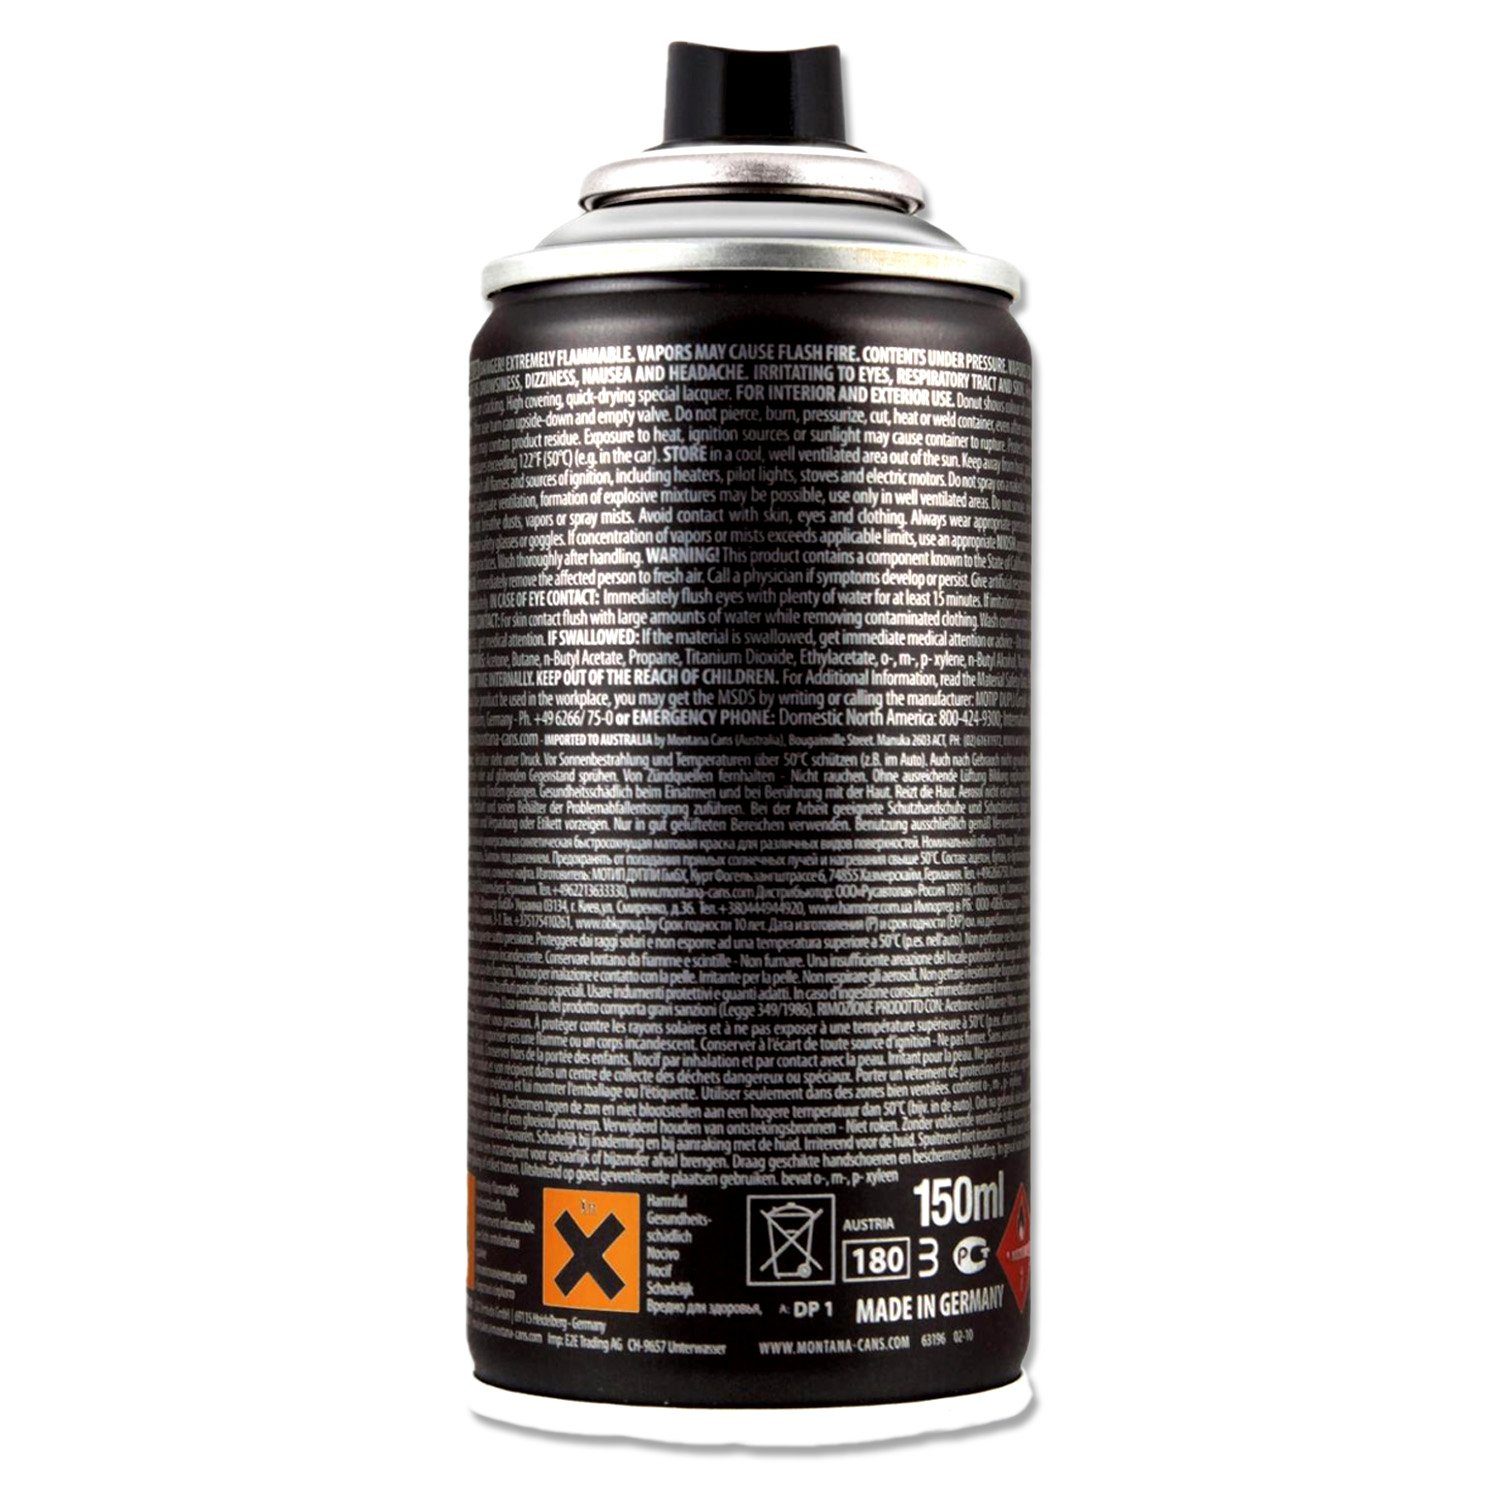 Silver (Farbauswahl) Montana BLACK Montana Cans Outline Cans 150ml Sprühfarbe Mini